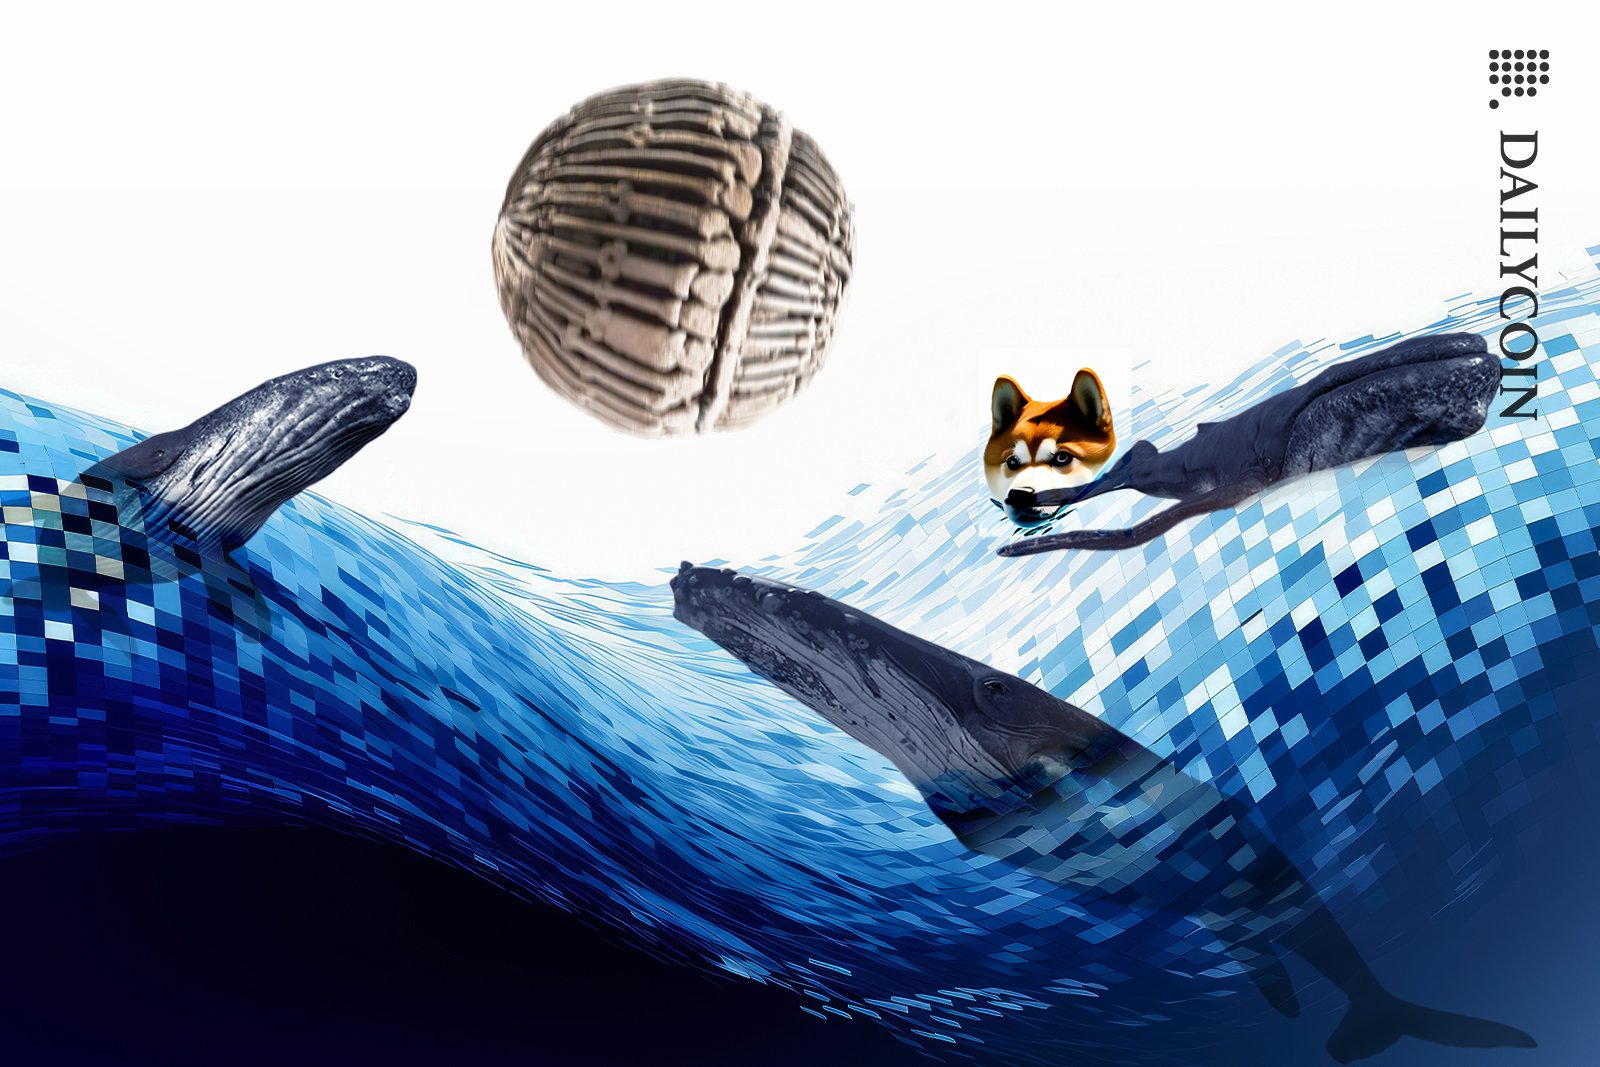 Whales playing with a Shiba Inu BONE ball.